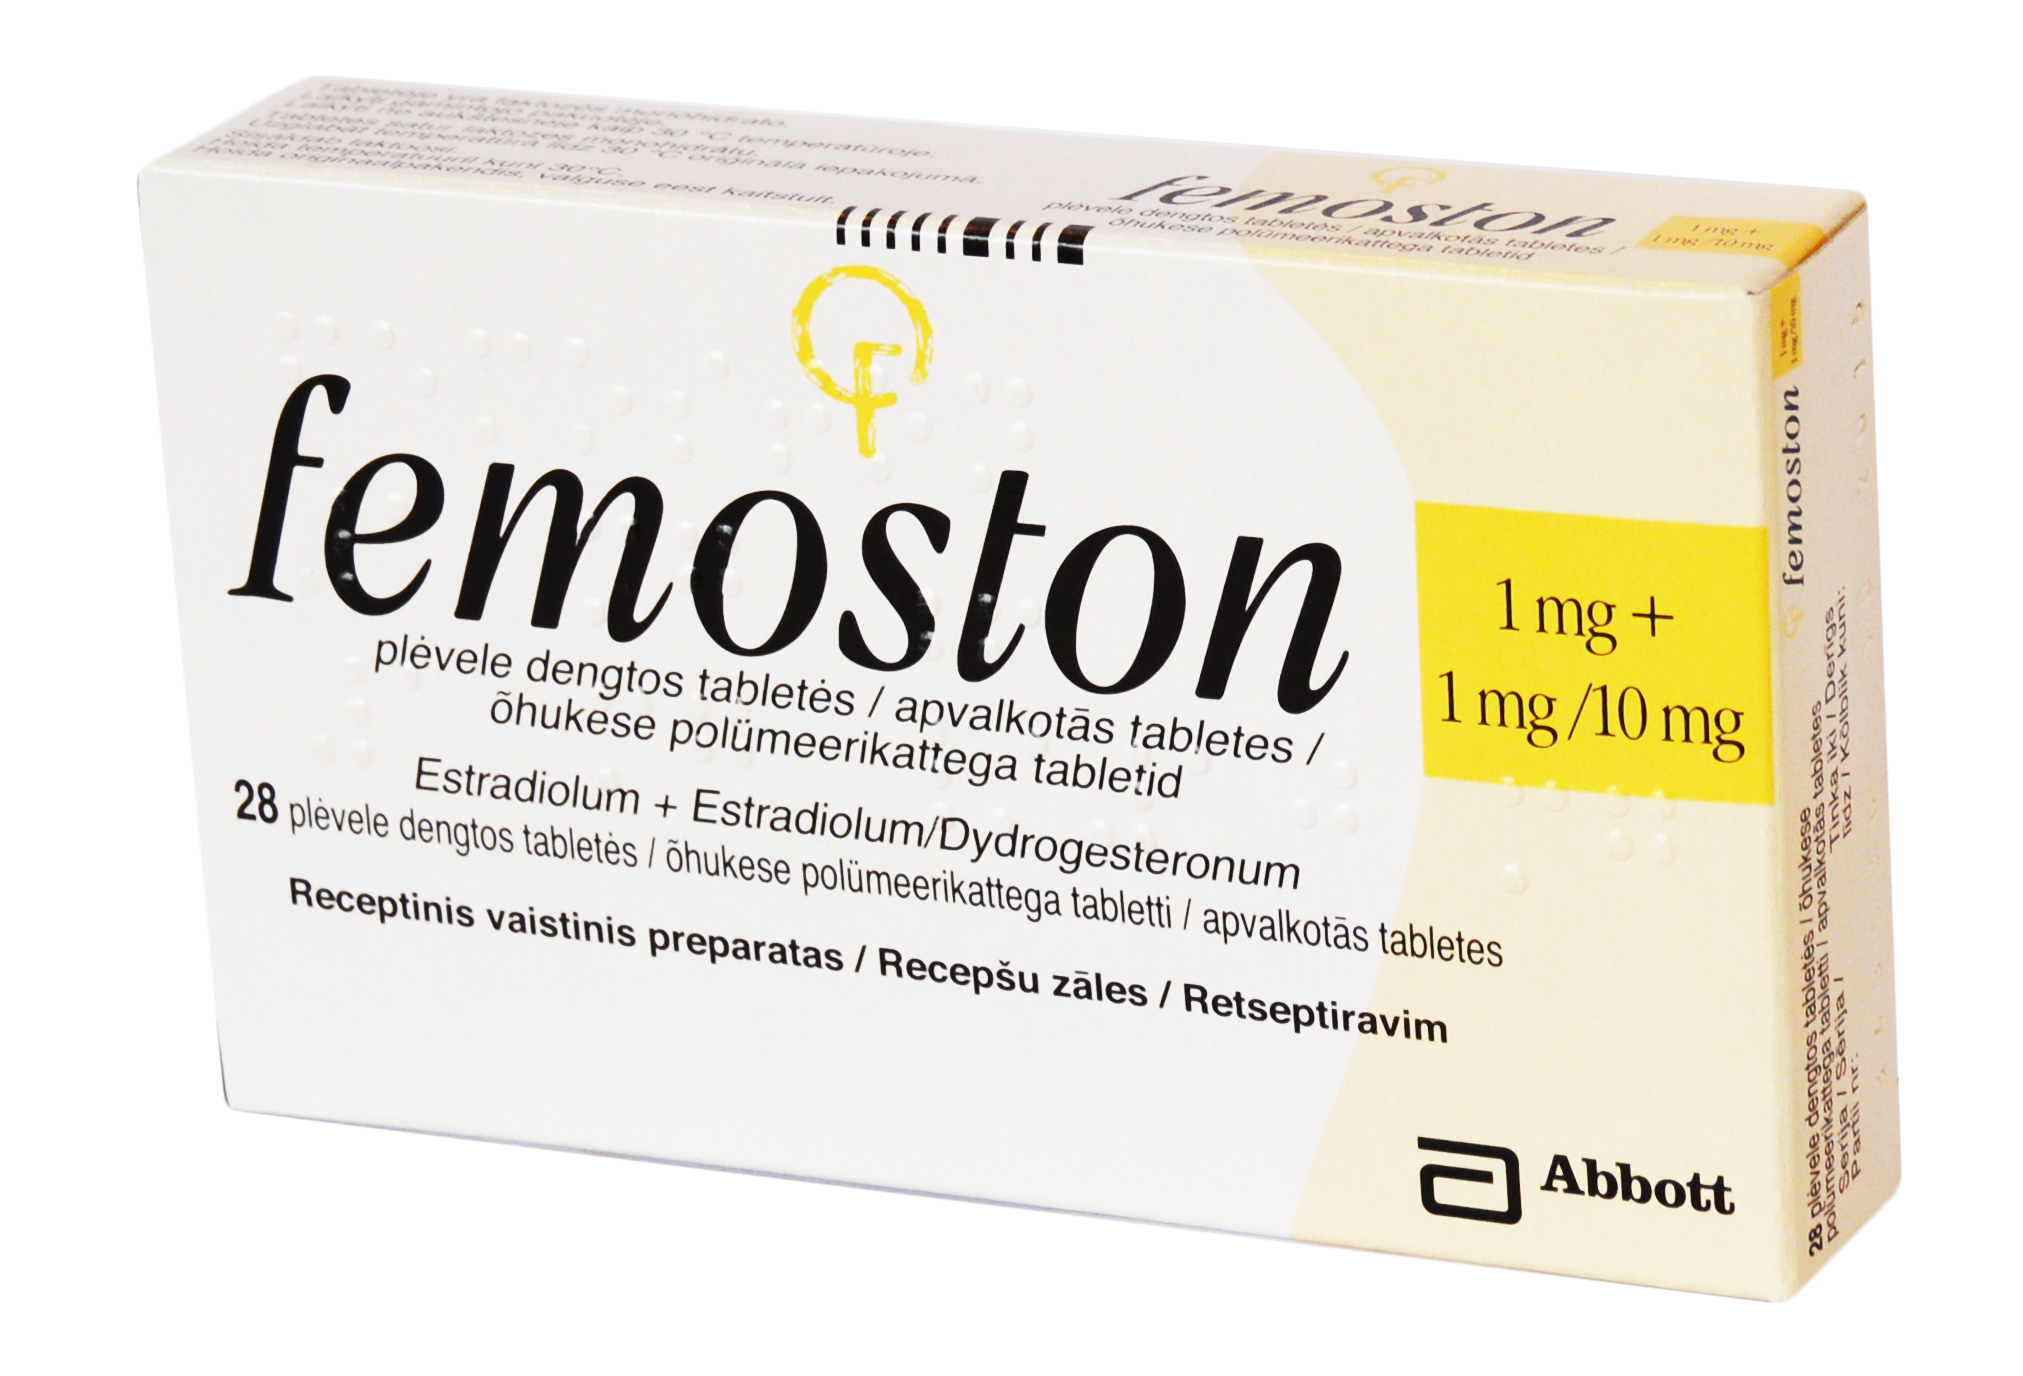 Фемостон 1 мг. Фемостон 2/10. Фемостон 5/10. Фемостон 10+1+1. Фемостон 1 и 1 разница